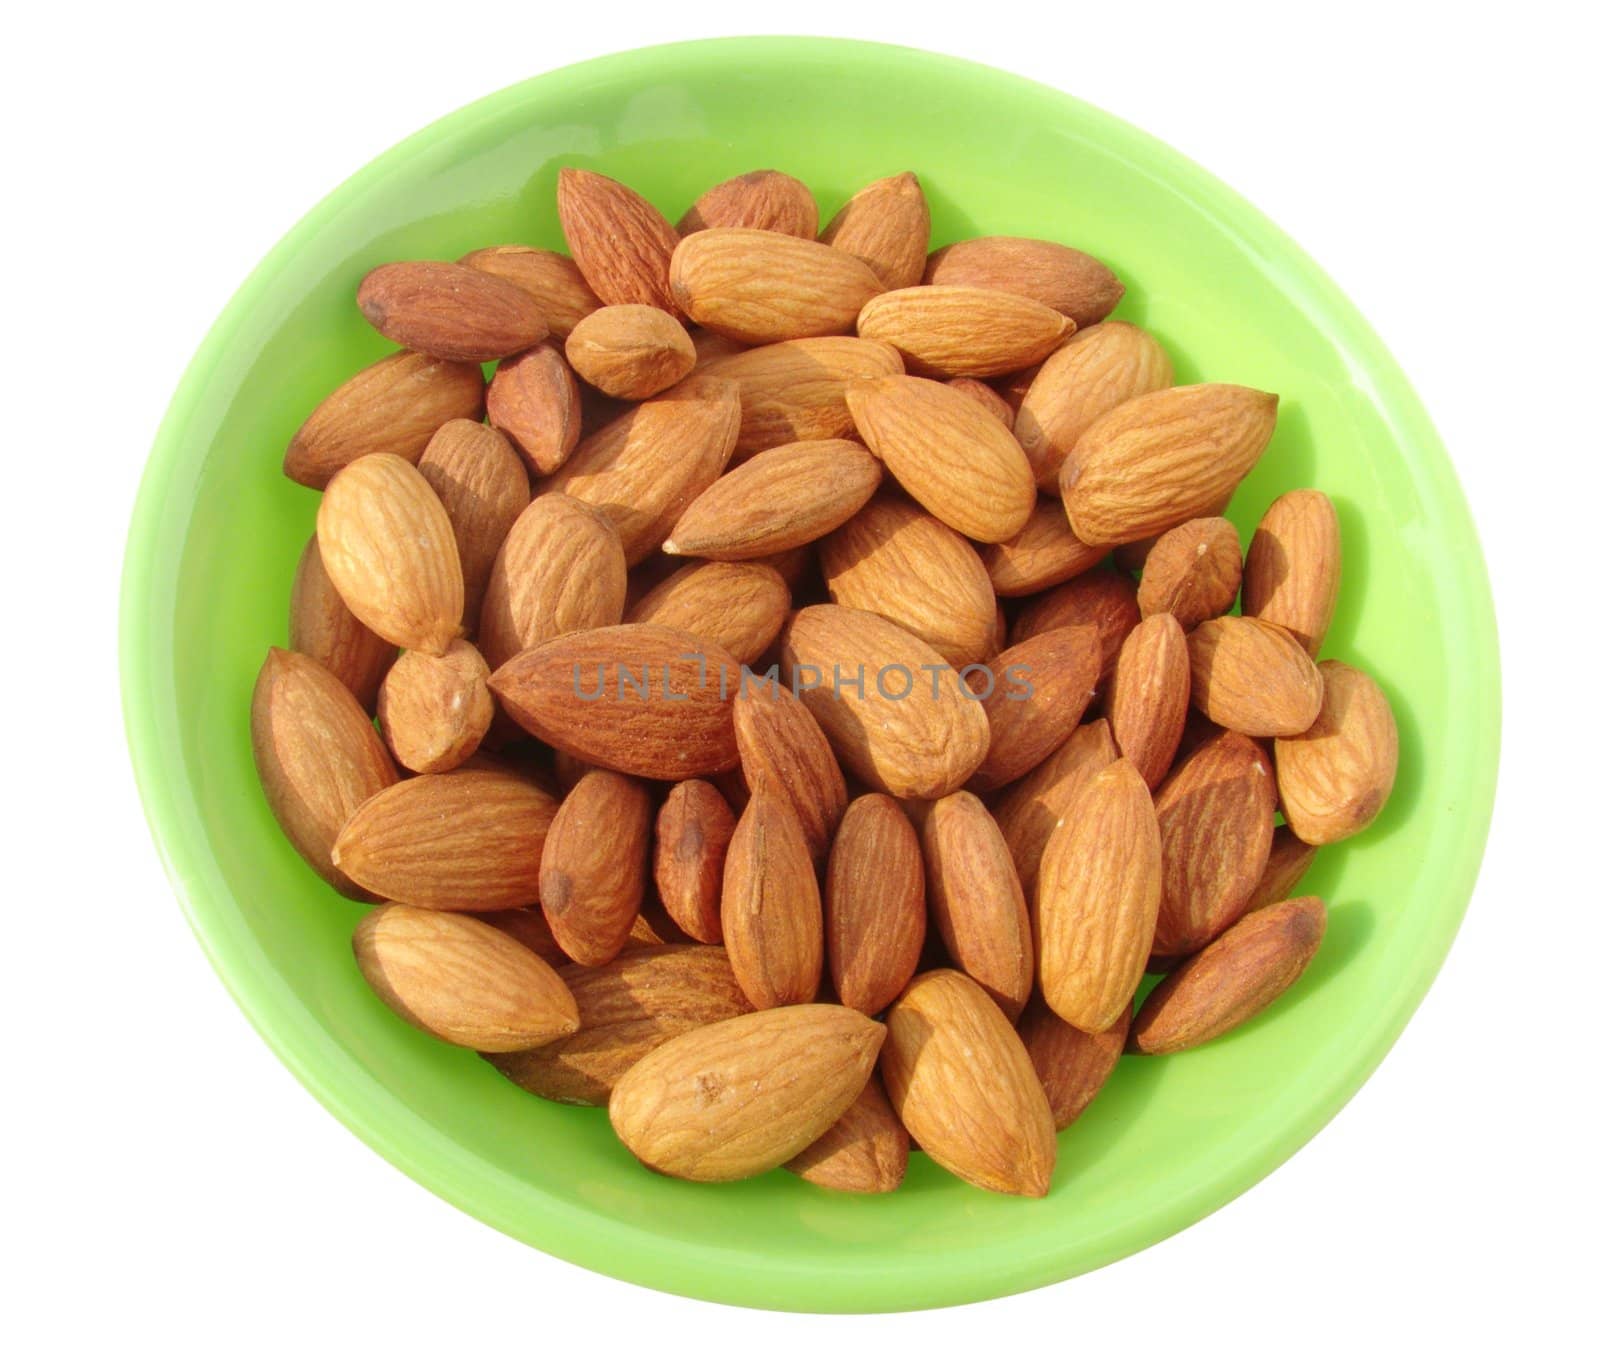 almonds in bowl  by lkant